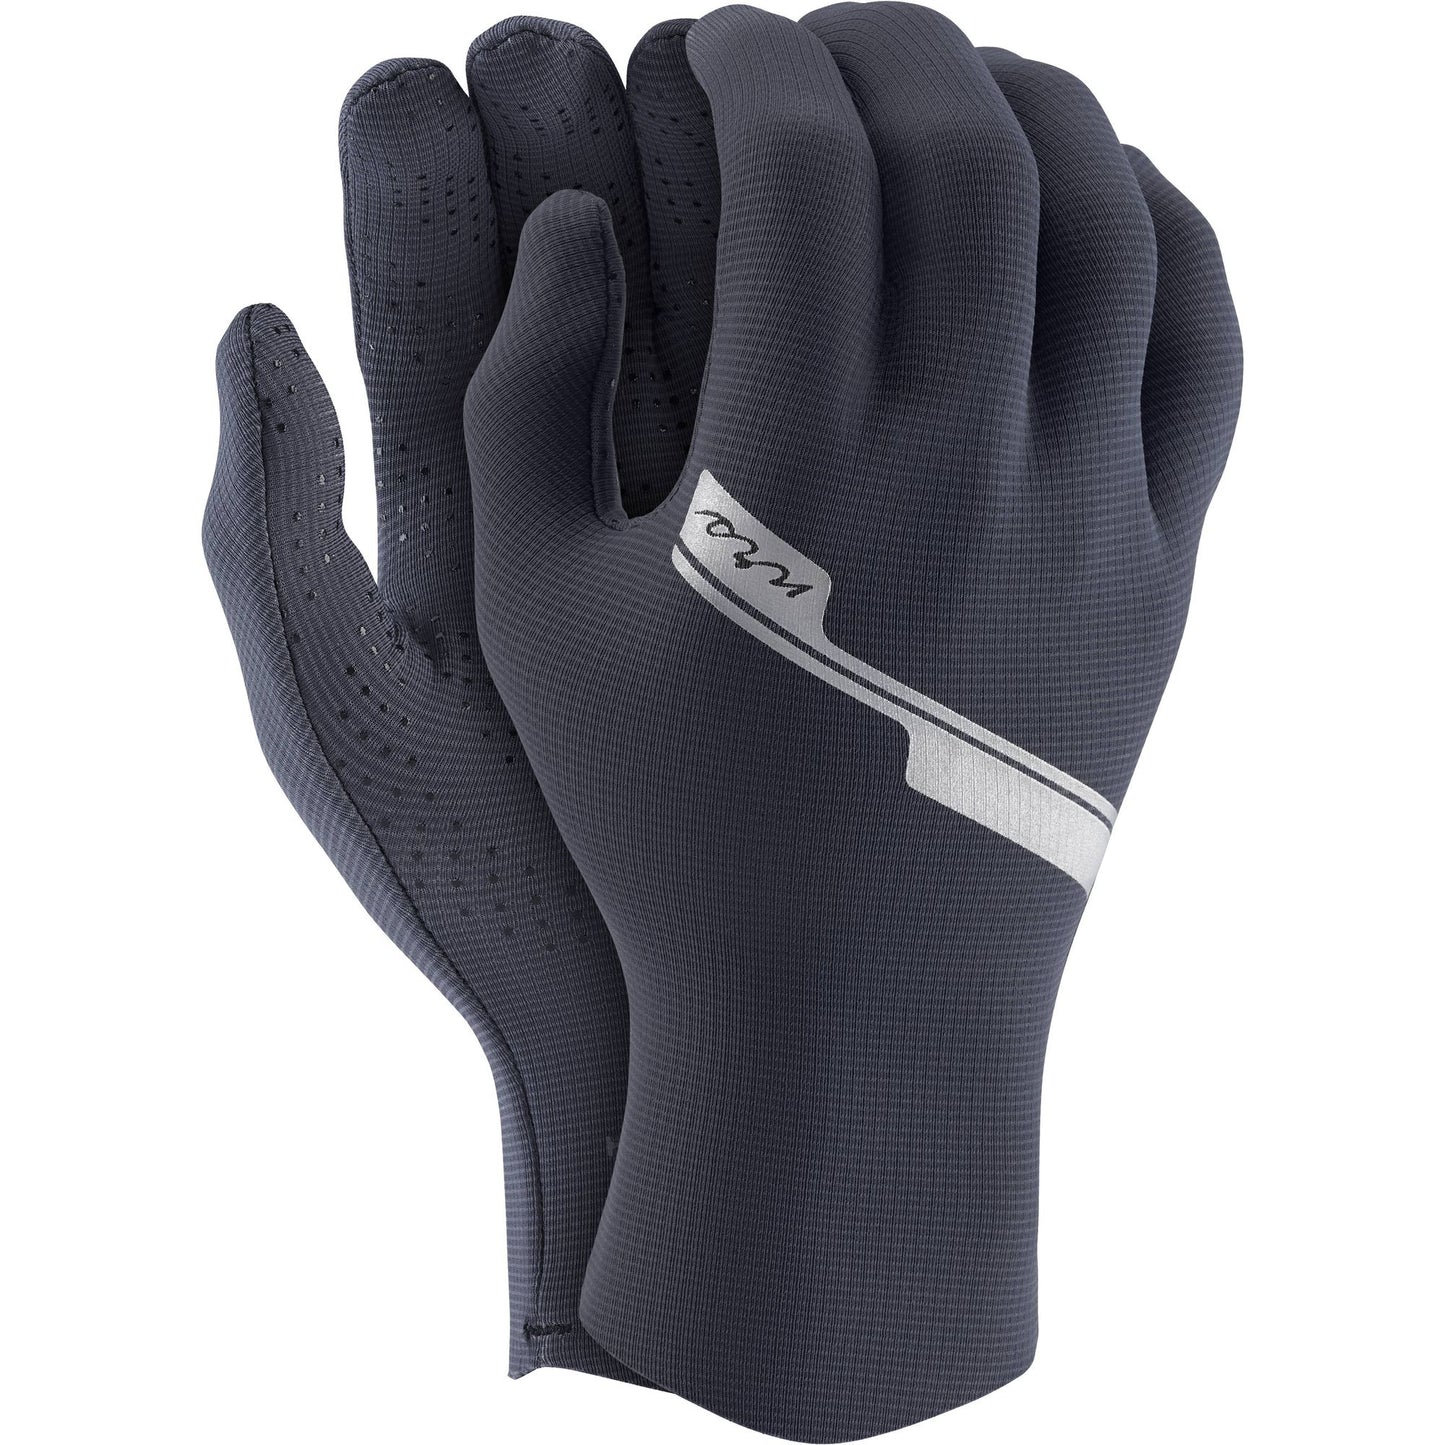 NRS Hydroskin glove, ladies